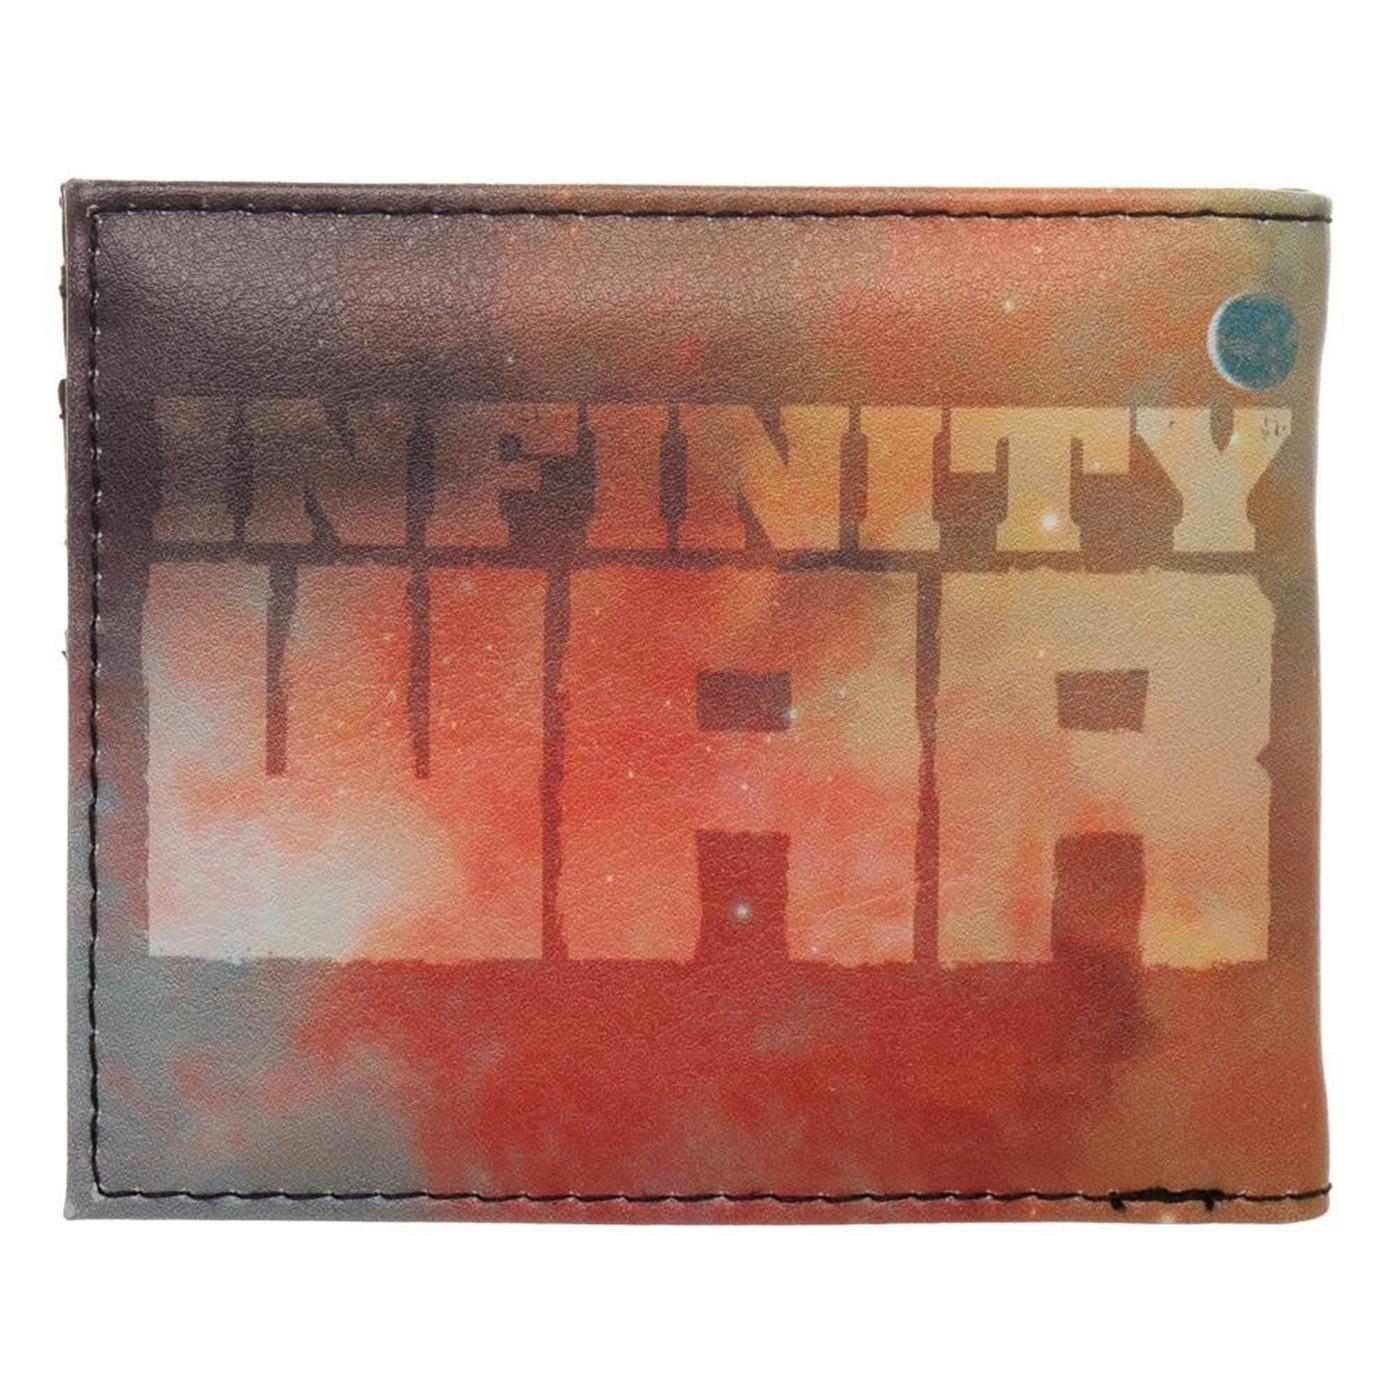 Infinity War Thanos Quickturn Men's Bi-Fold Wallet